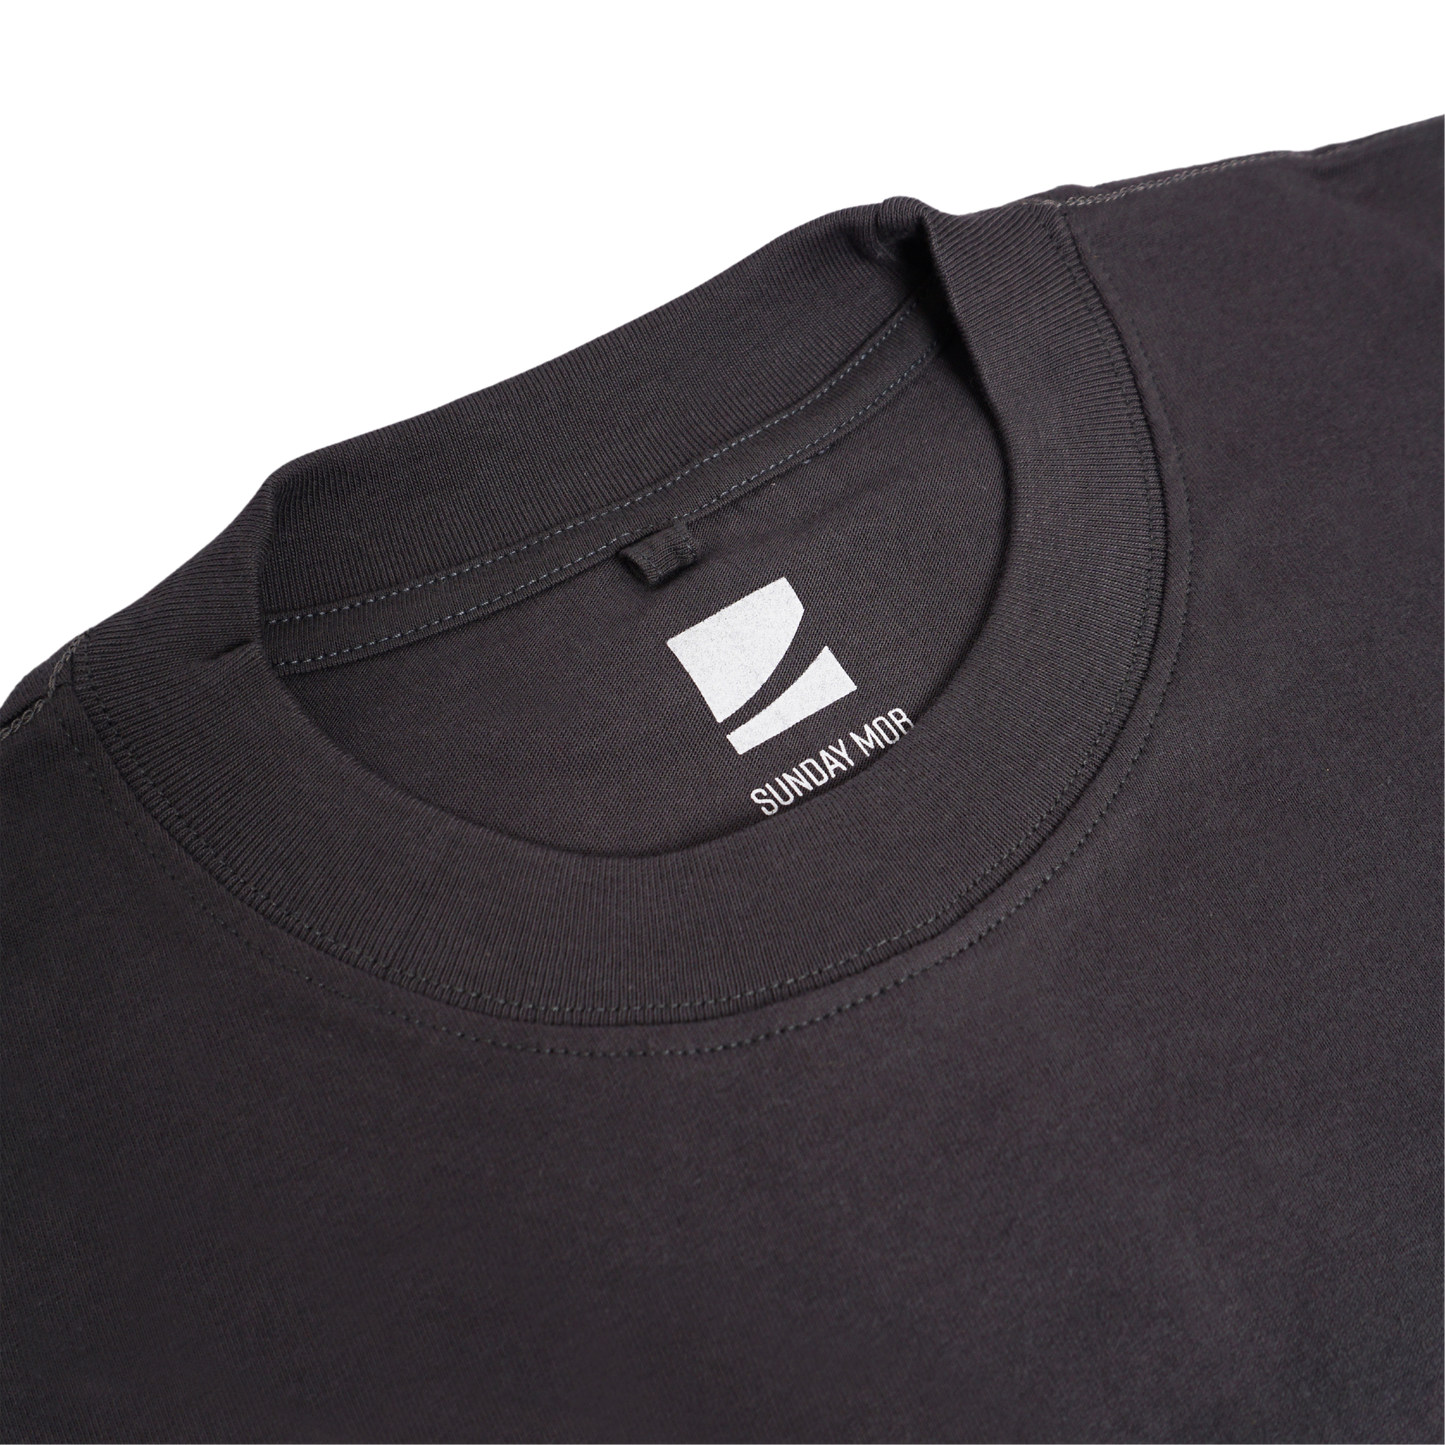 Oversized  Pocket T-Shirt Grey (NEW)